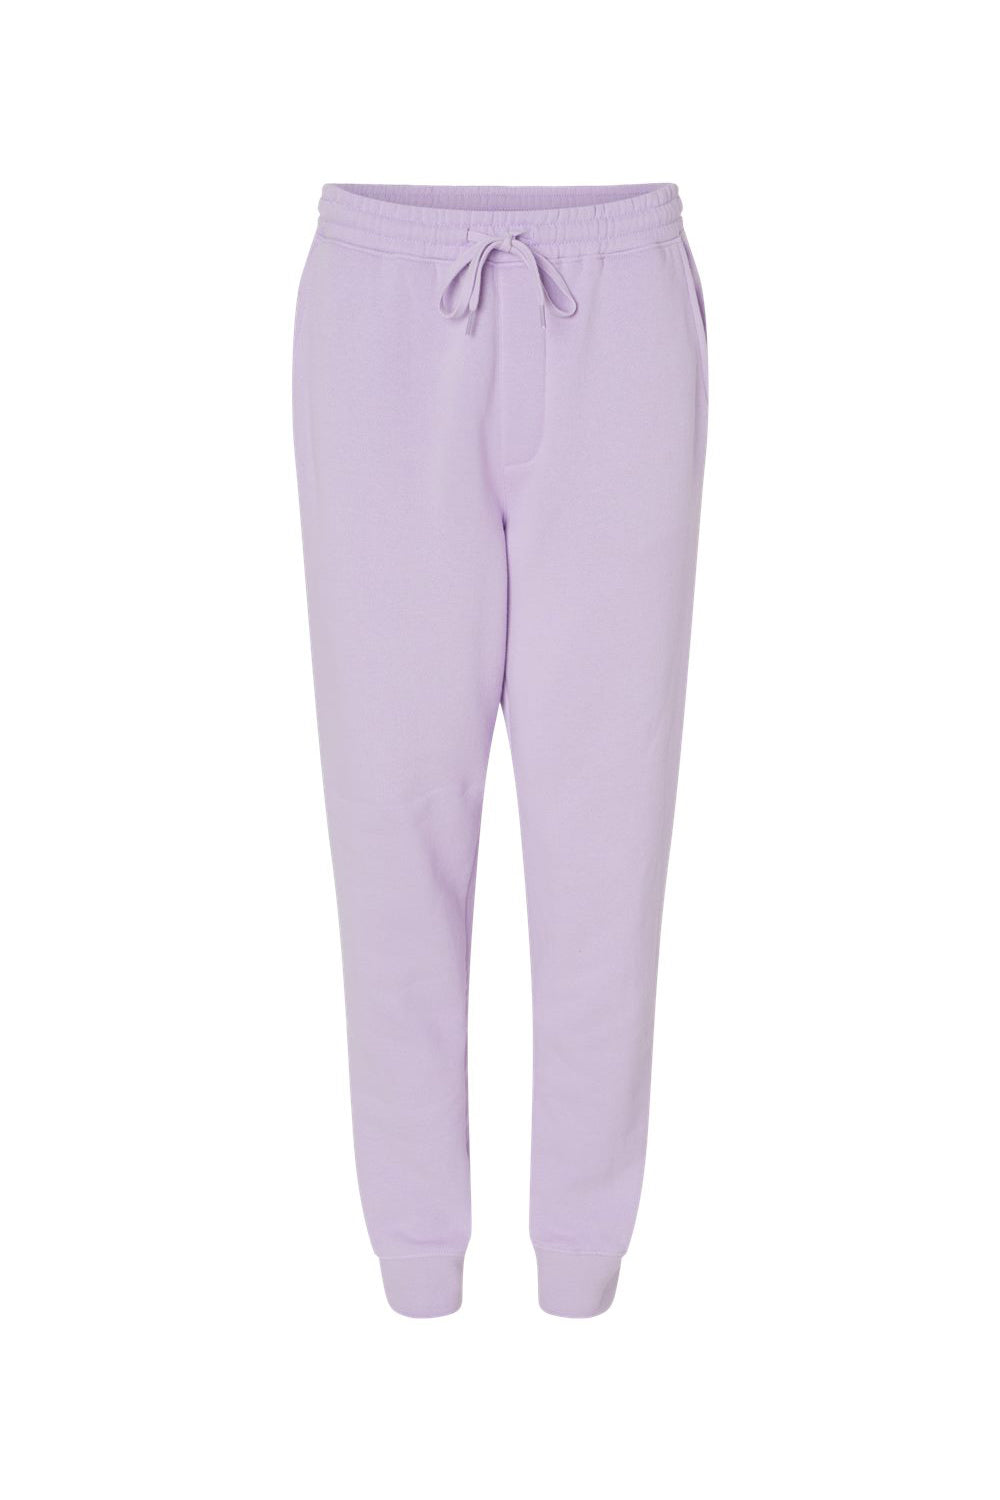 Independent Trading Co. IND20PNT Mens Fleece Sweatpants w/ Pockets Lavender Purple Flat Front